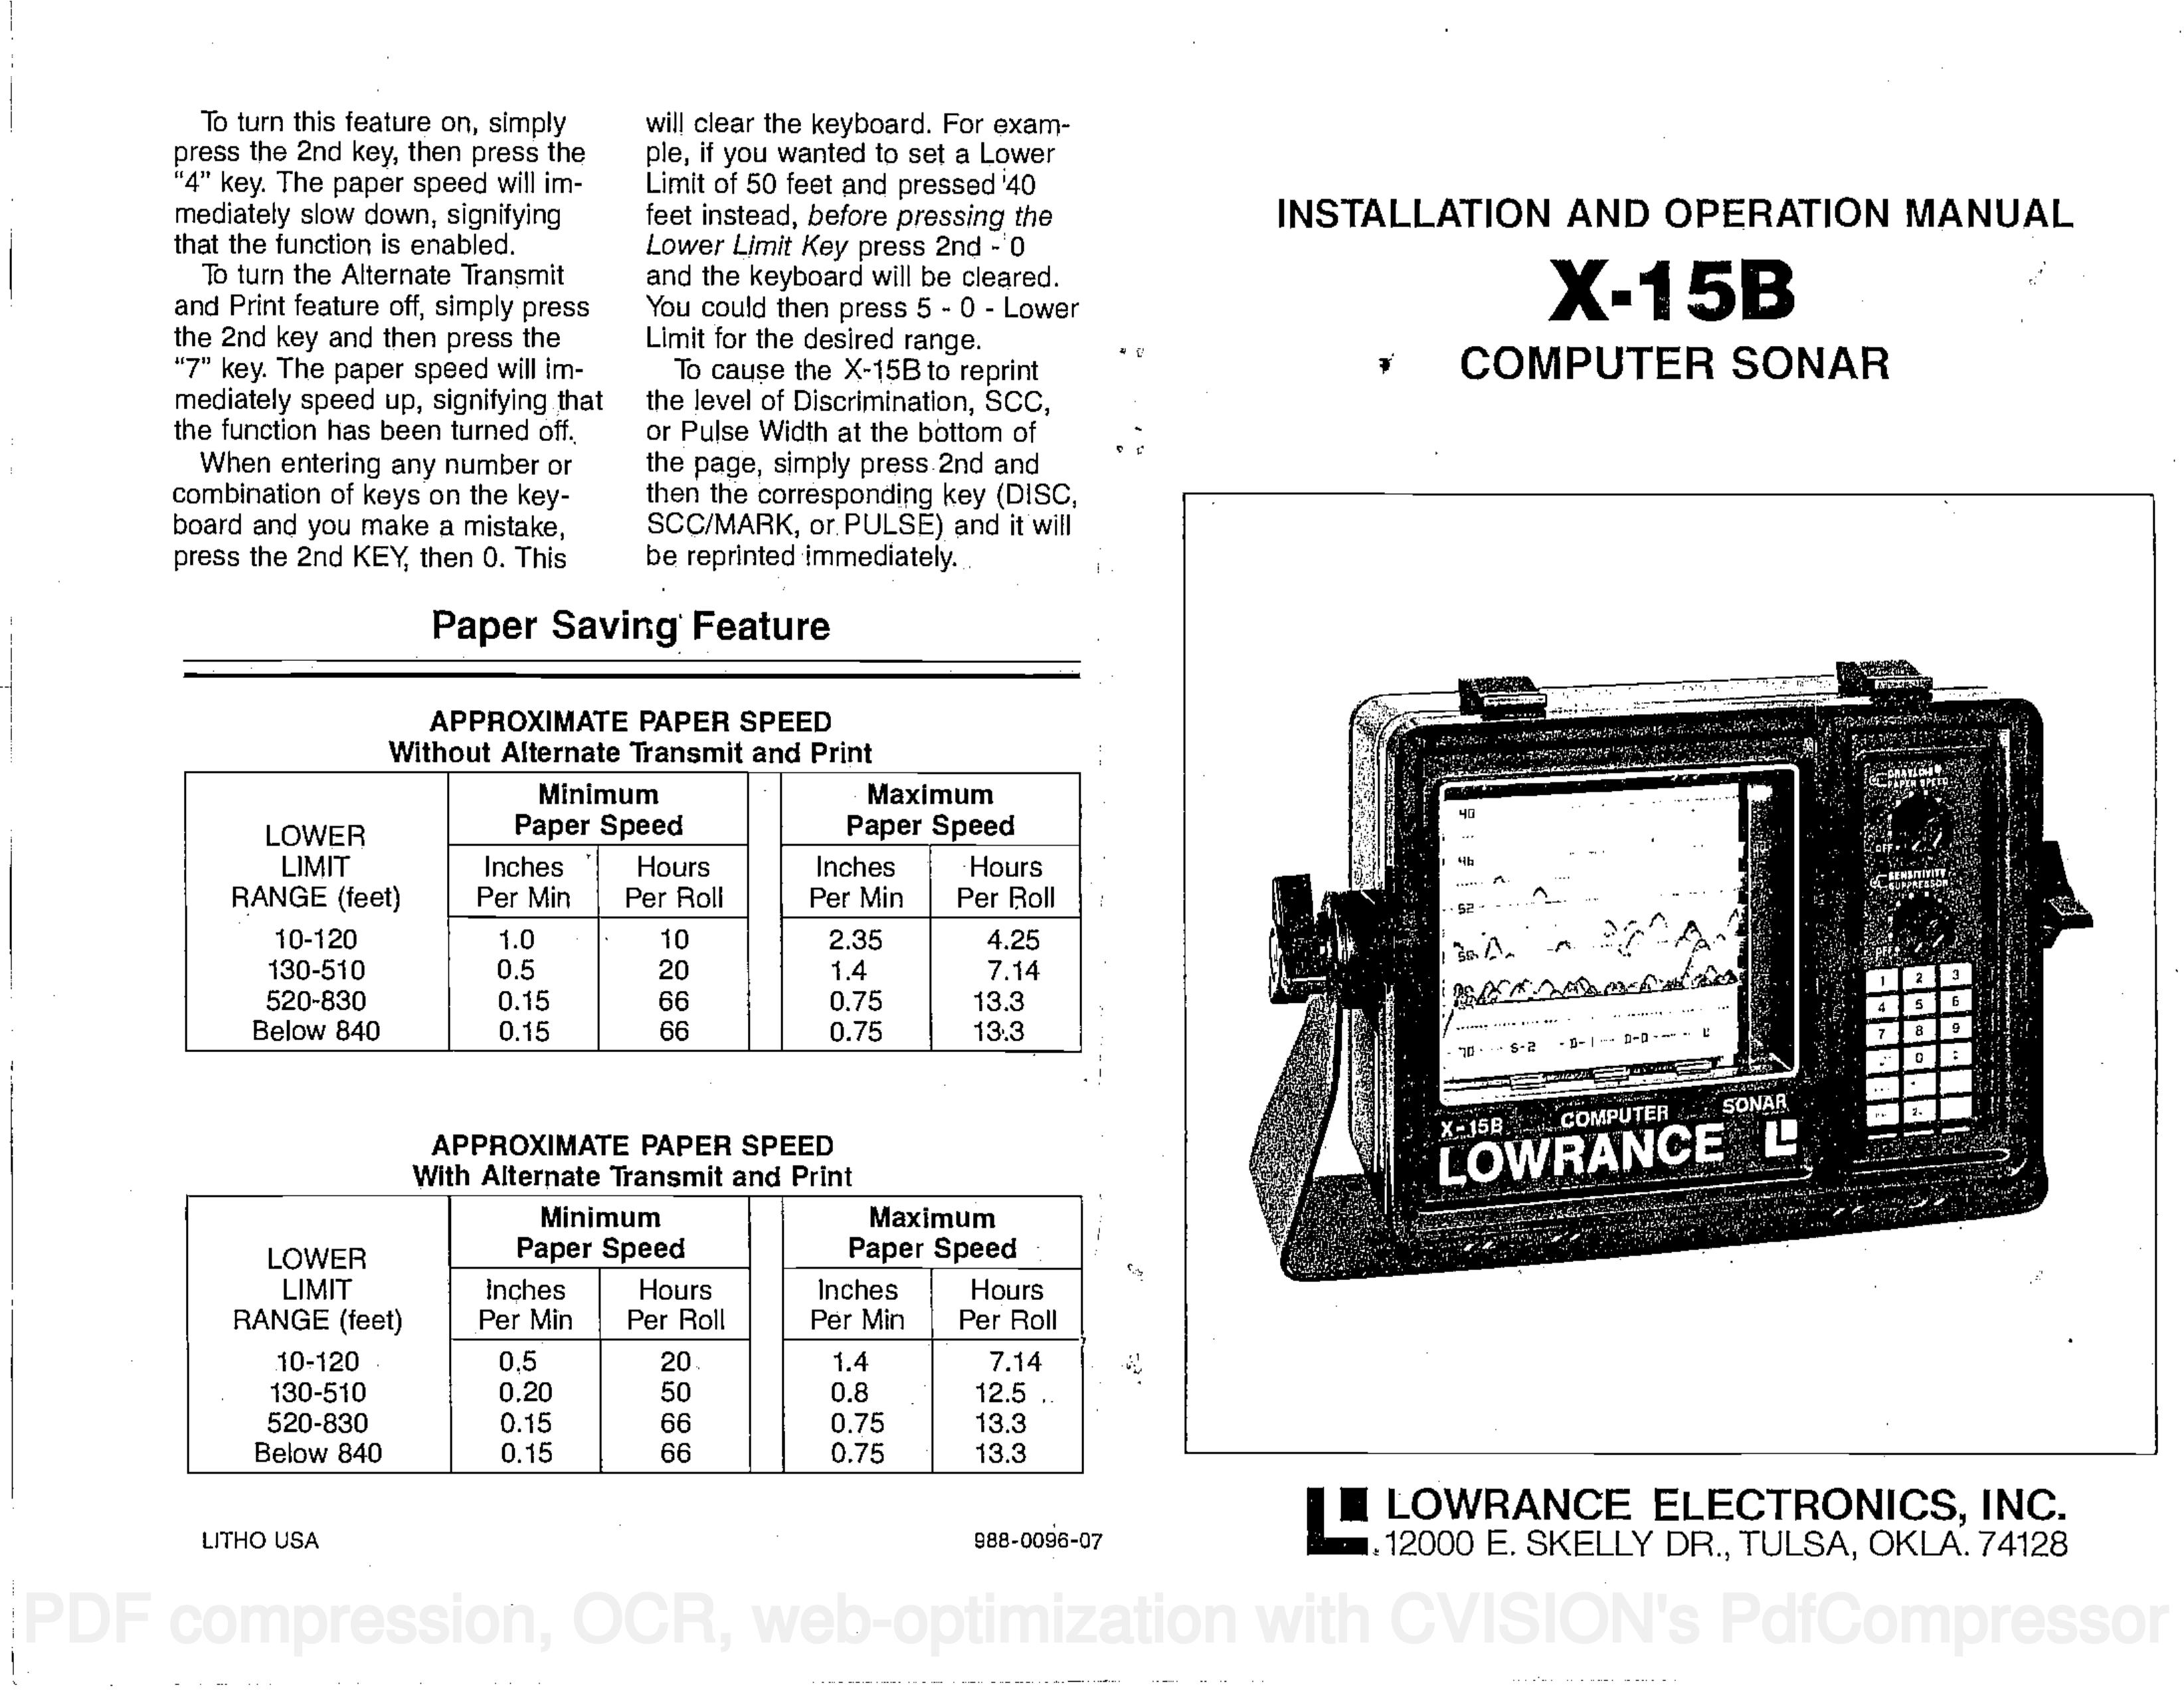 Lowrance electronic X-15B SONAR User Manual